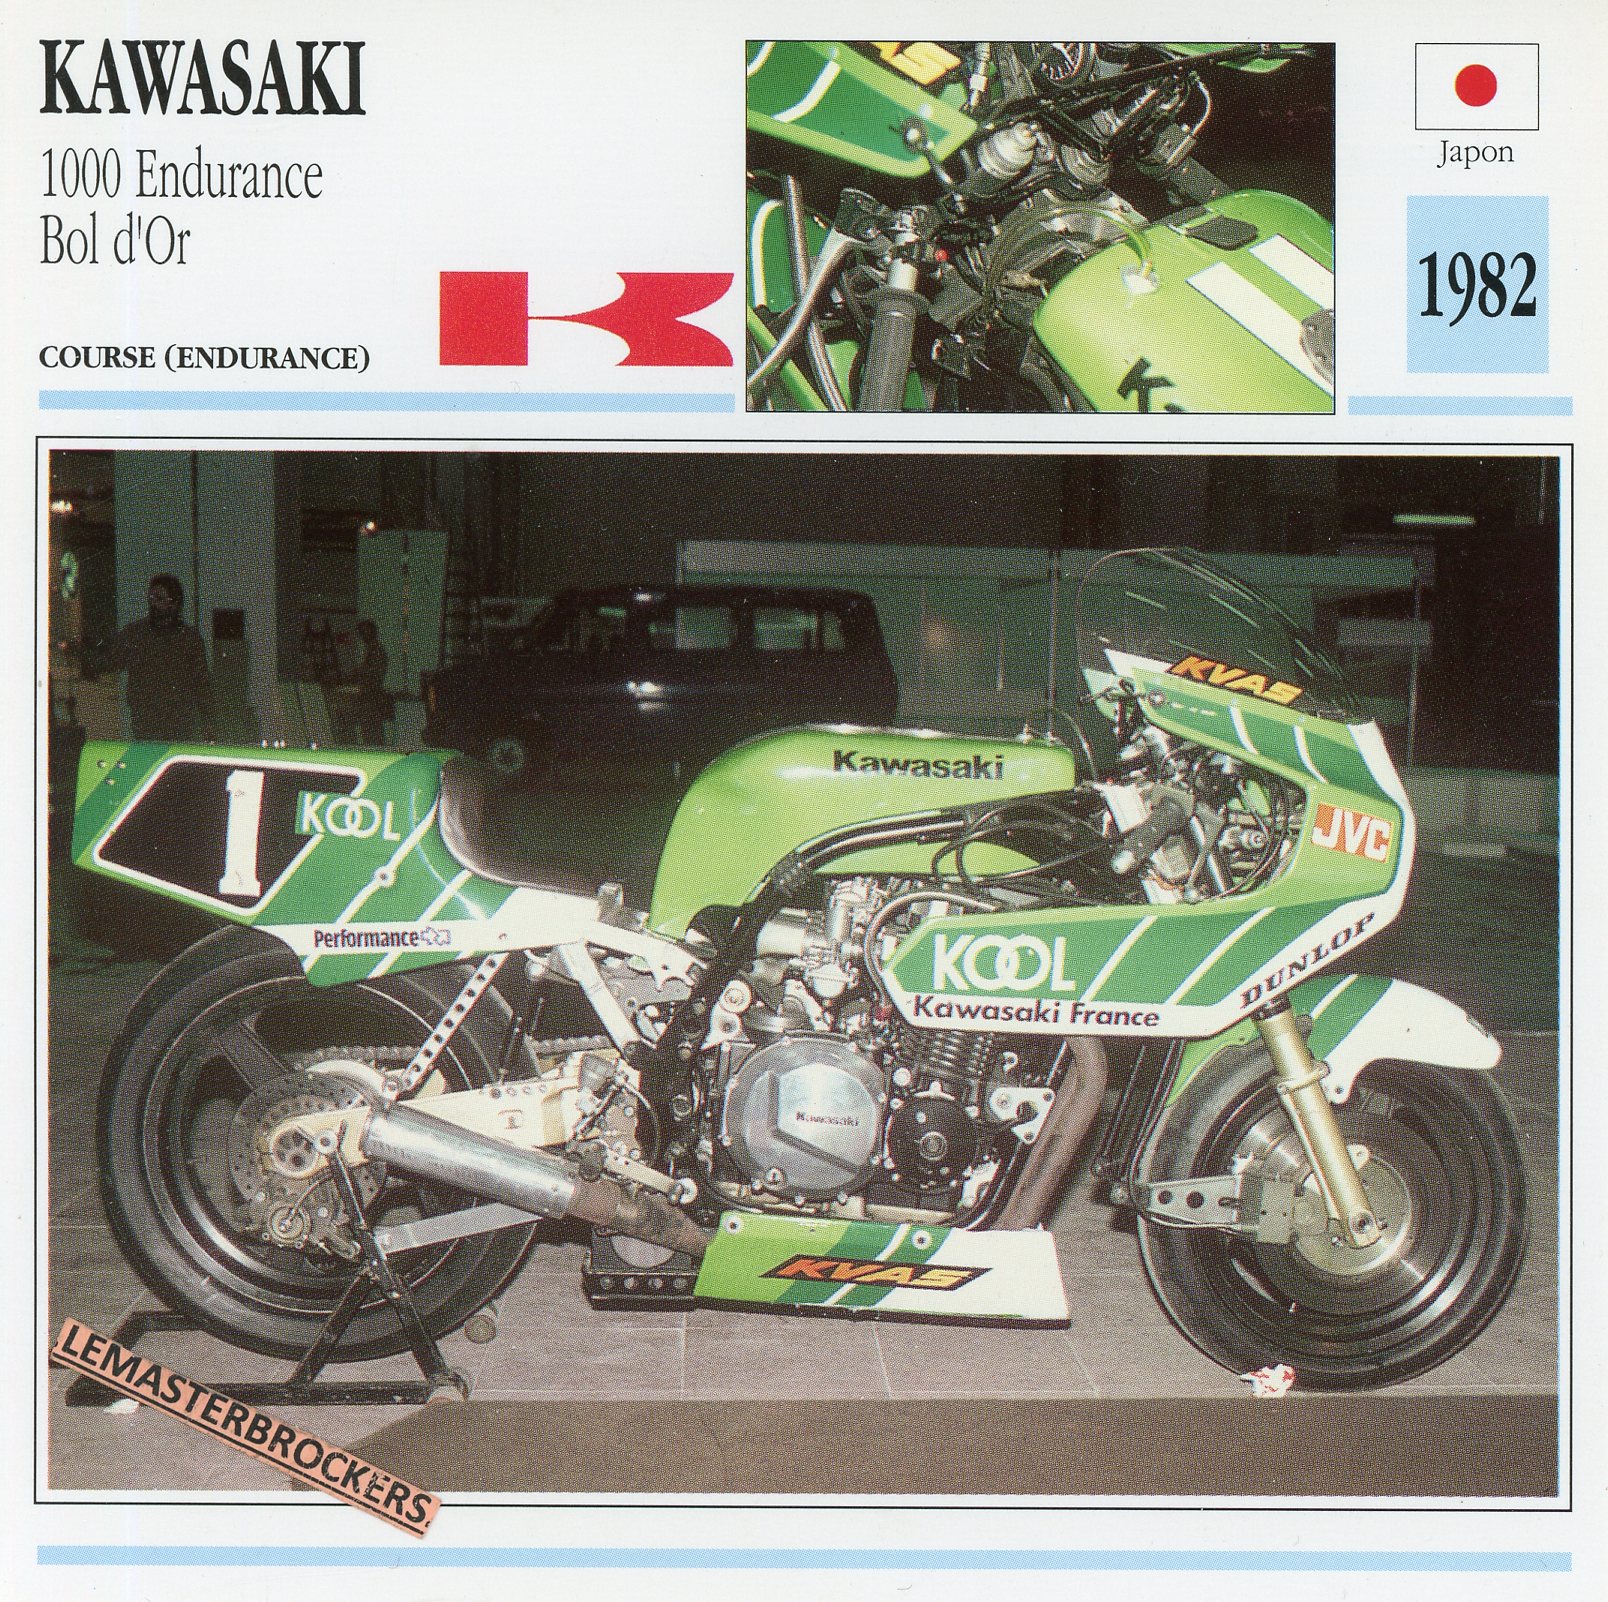 KAWASAKI-BOL-D'OR-ENDURANCE-1982-FICHE-MOTO-KAWASAKI-1000-LEMASTERBROCKERS